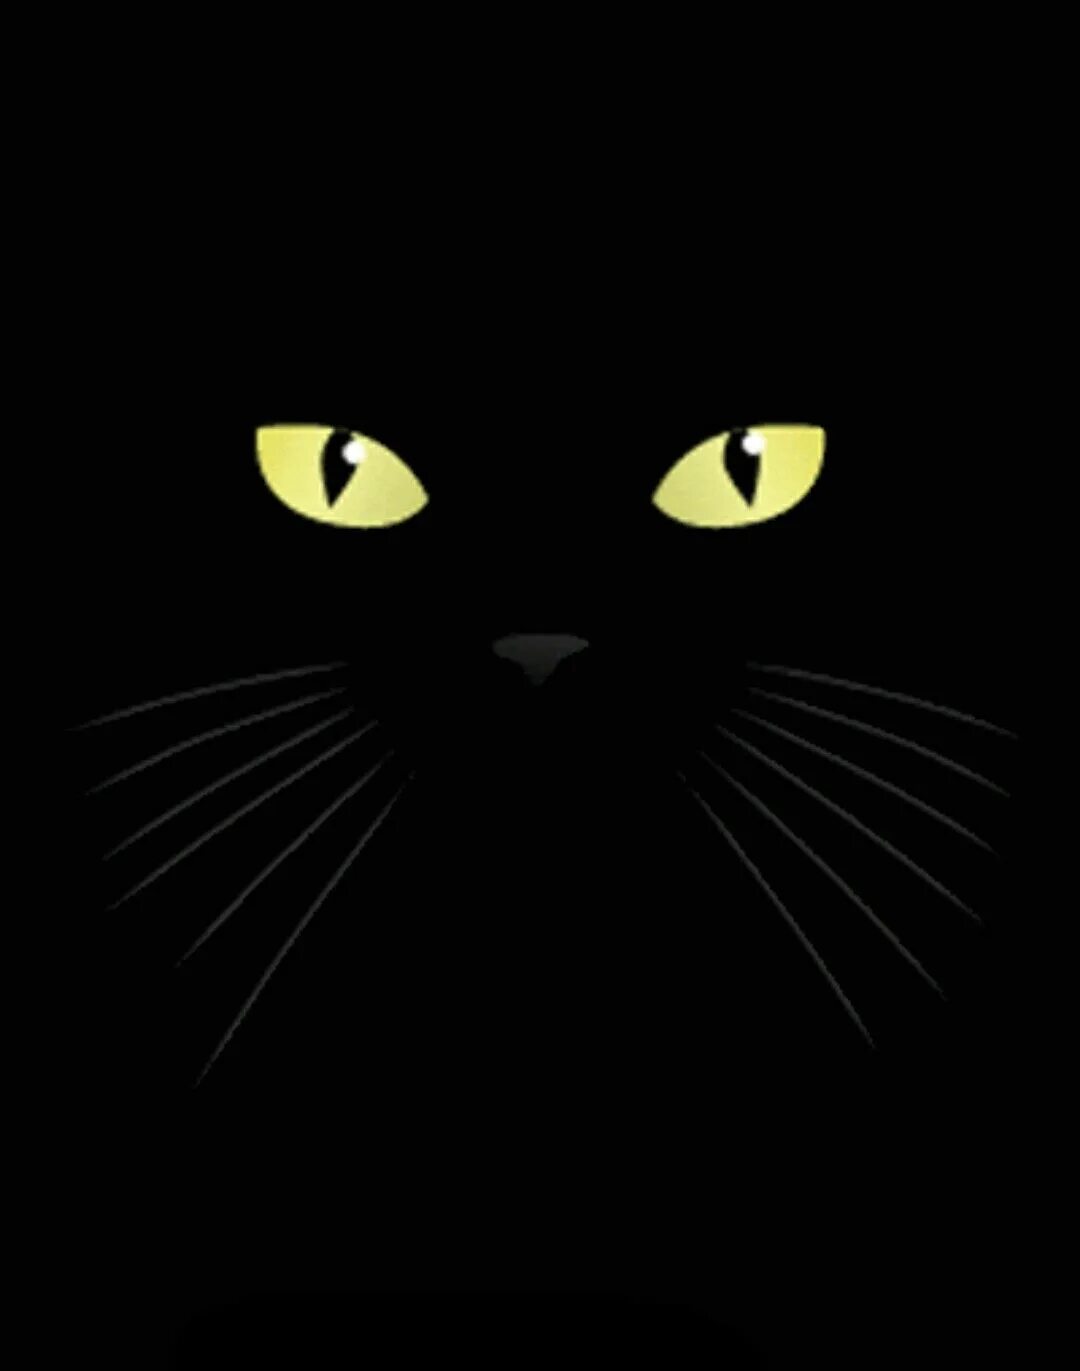 Чёрный кот. Аватарка черный кот. Черная кошка на аватарку. Аватарки с именами.